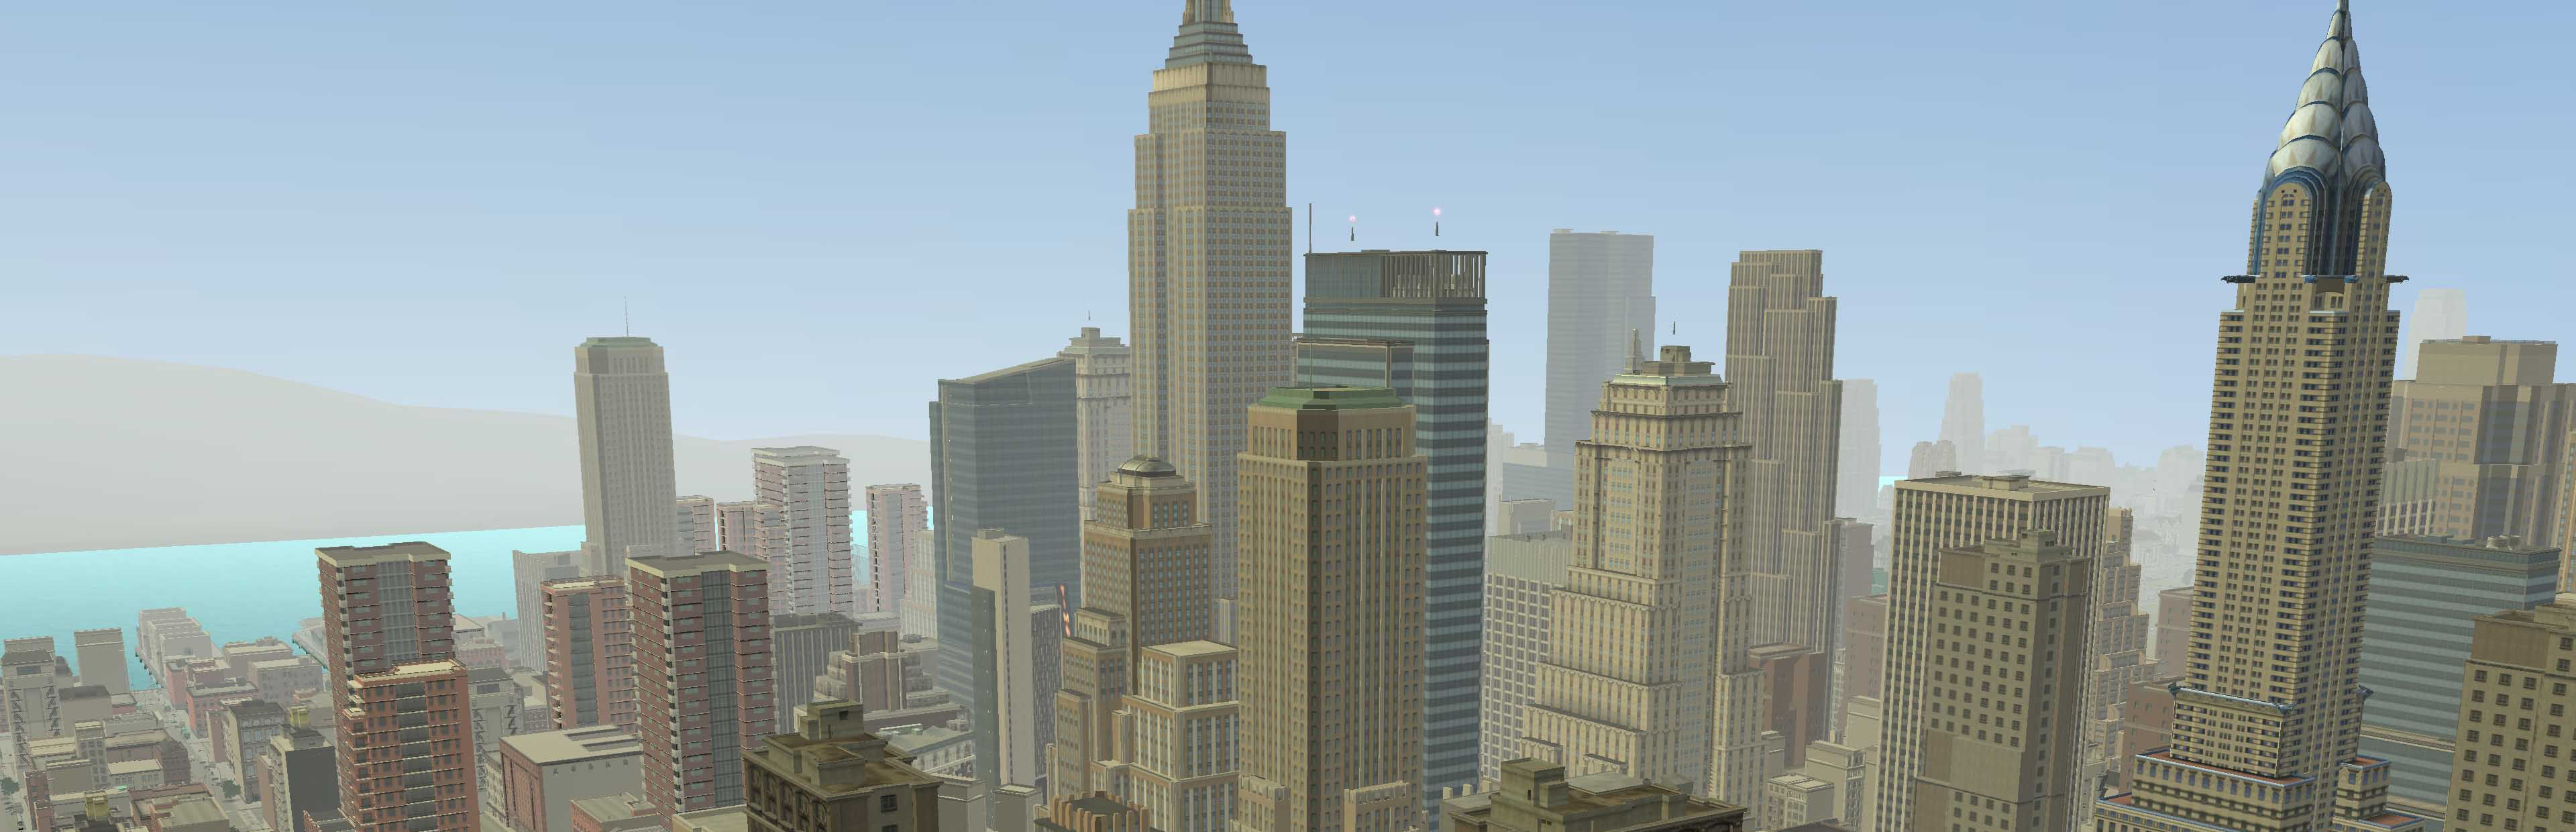 tycoon city new york